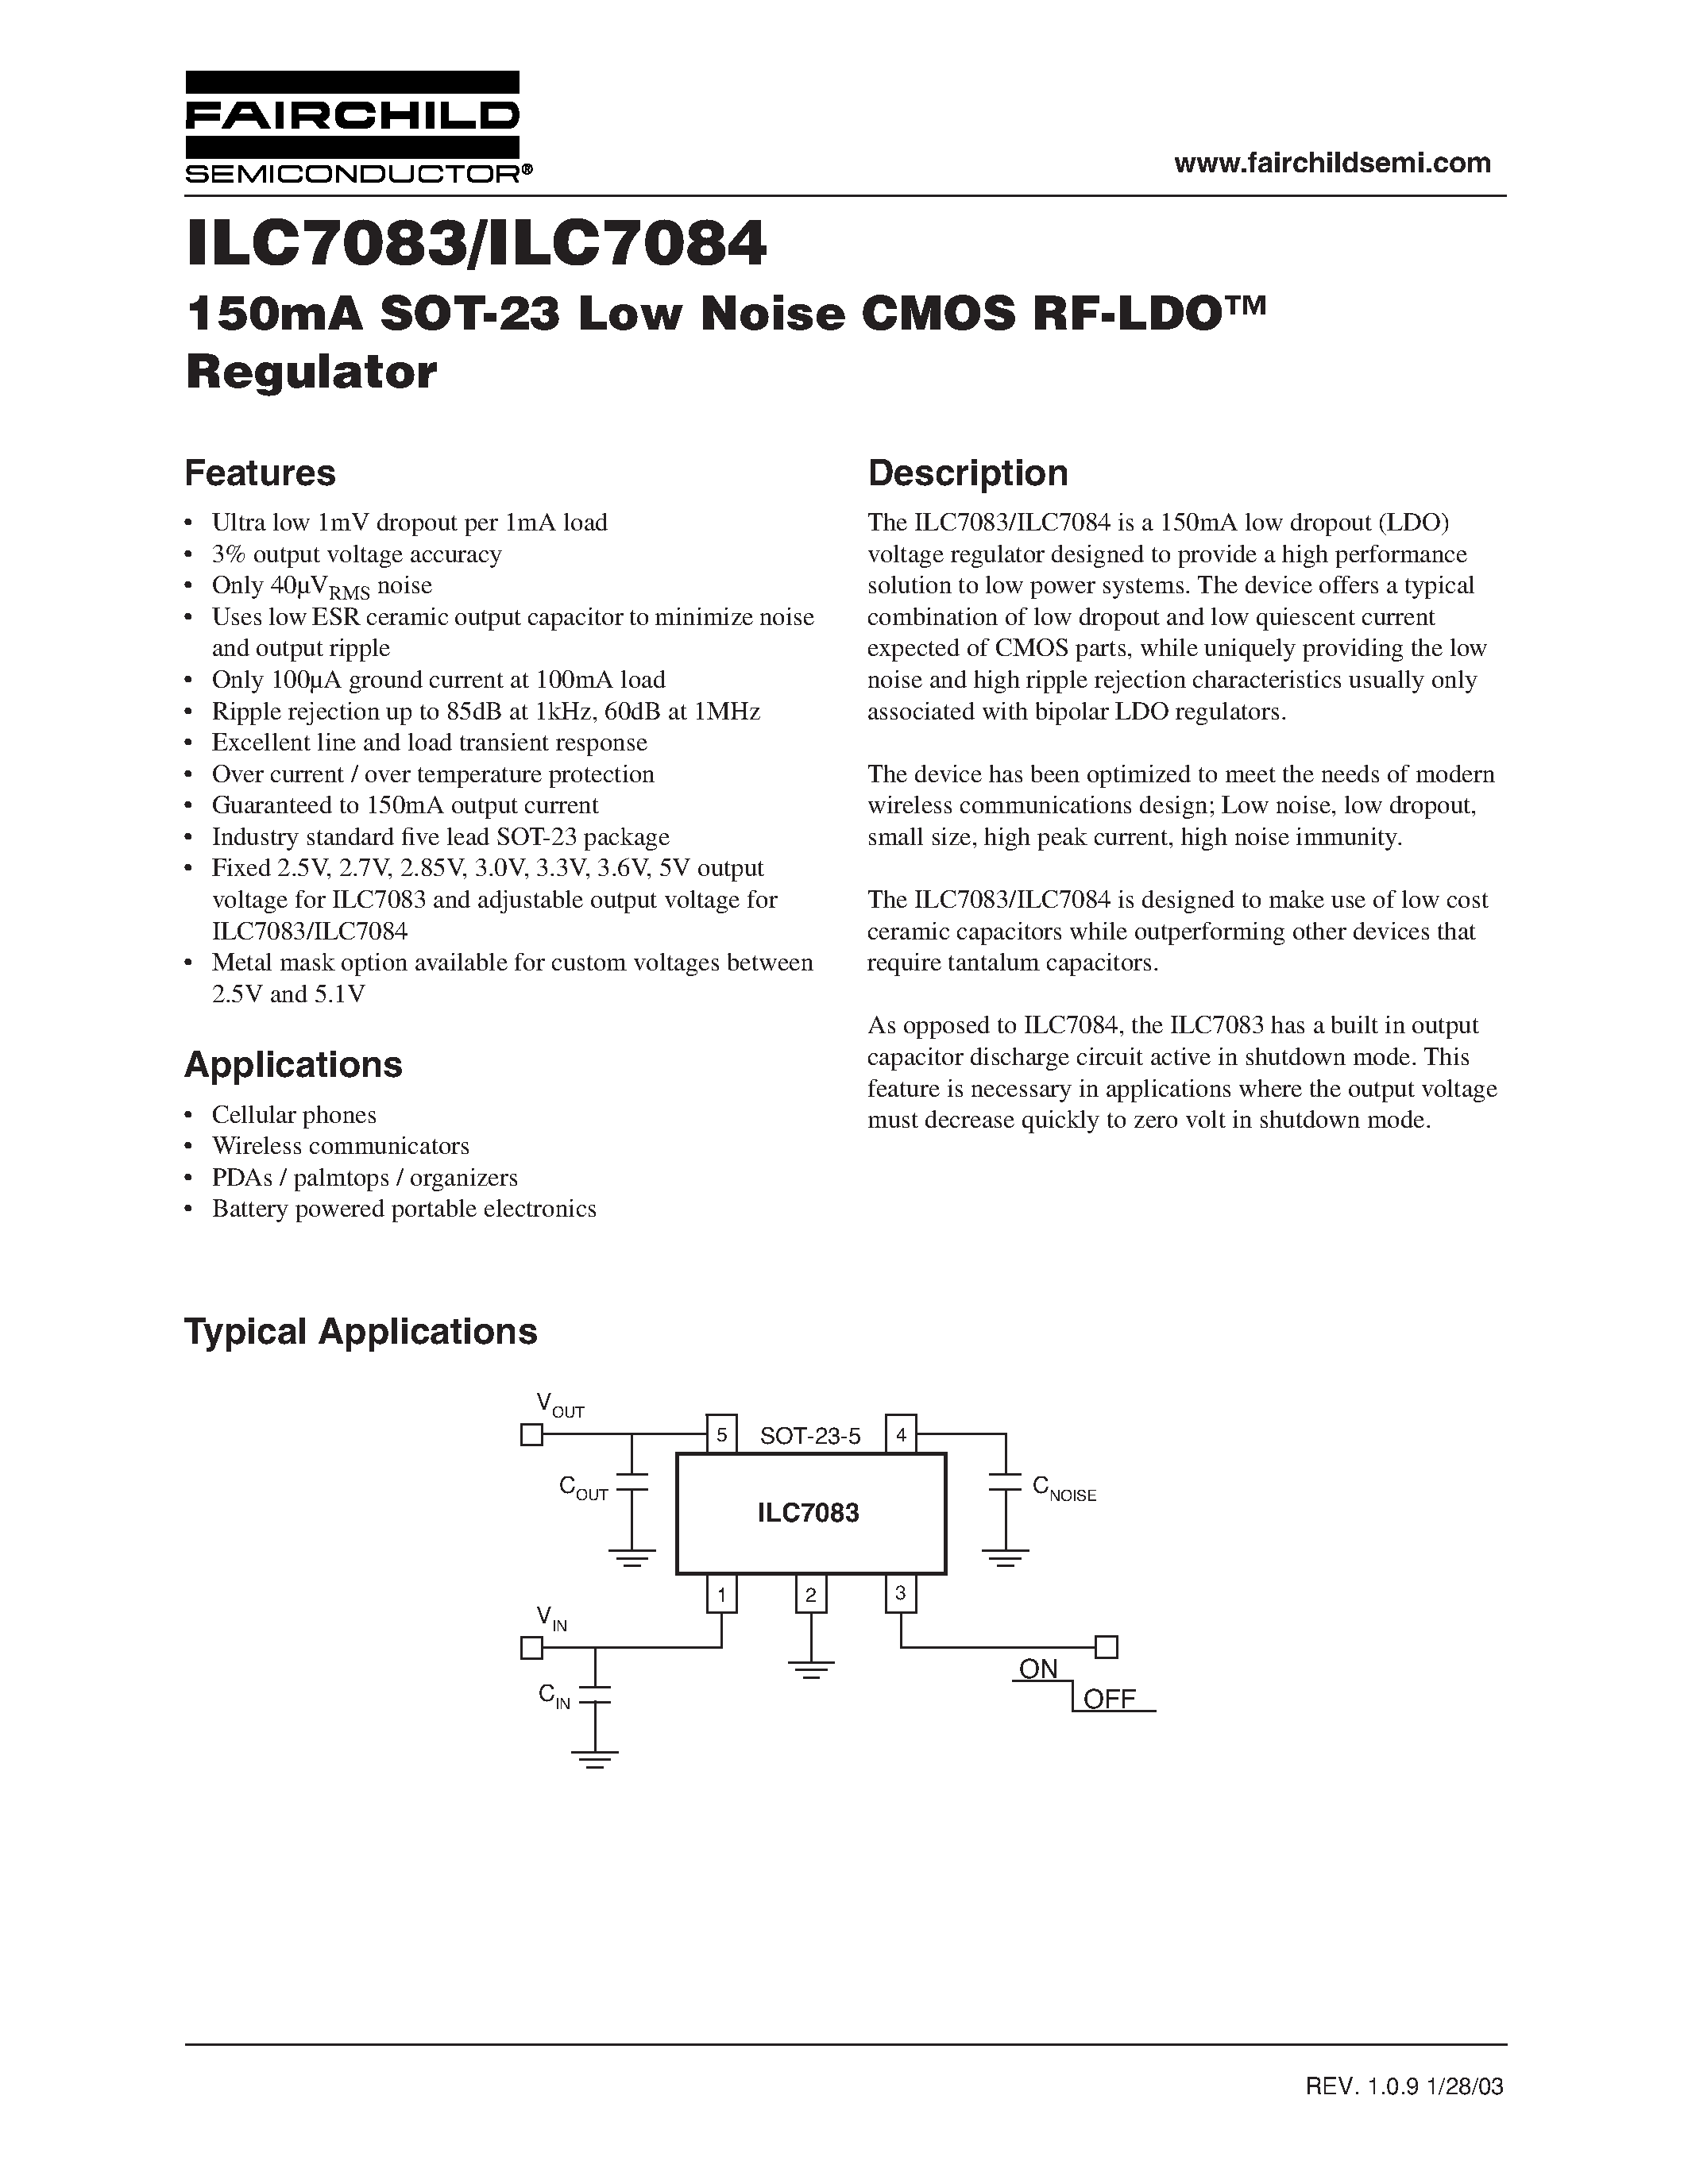 Datasheet ILC7083 - 150mA SOT-23 Low Noise CMOS RF-LDO Regulator page 1